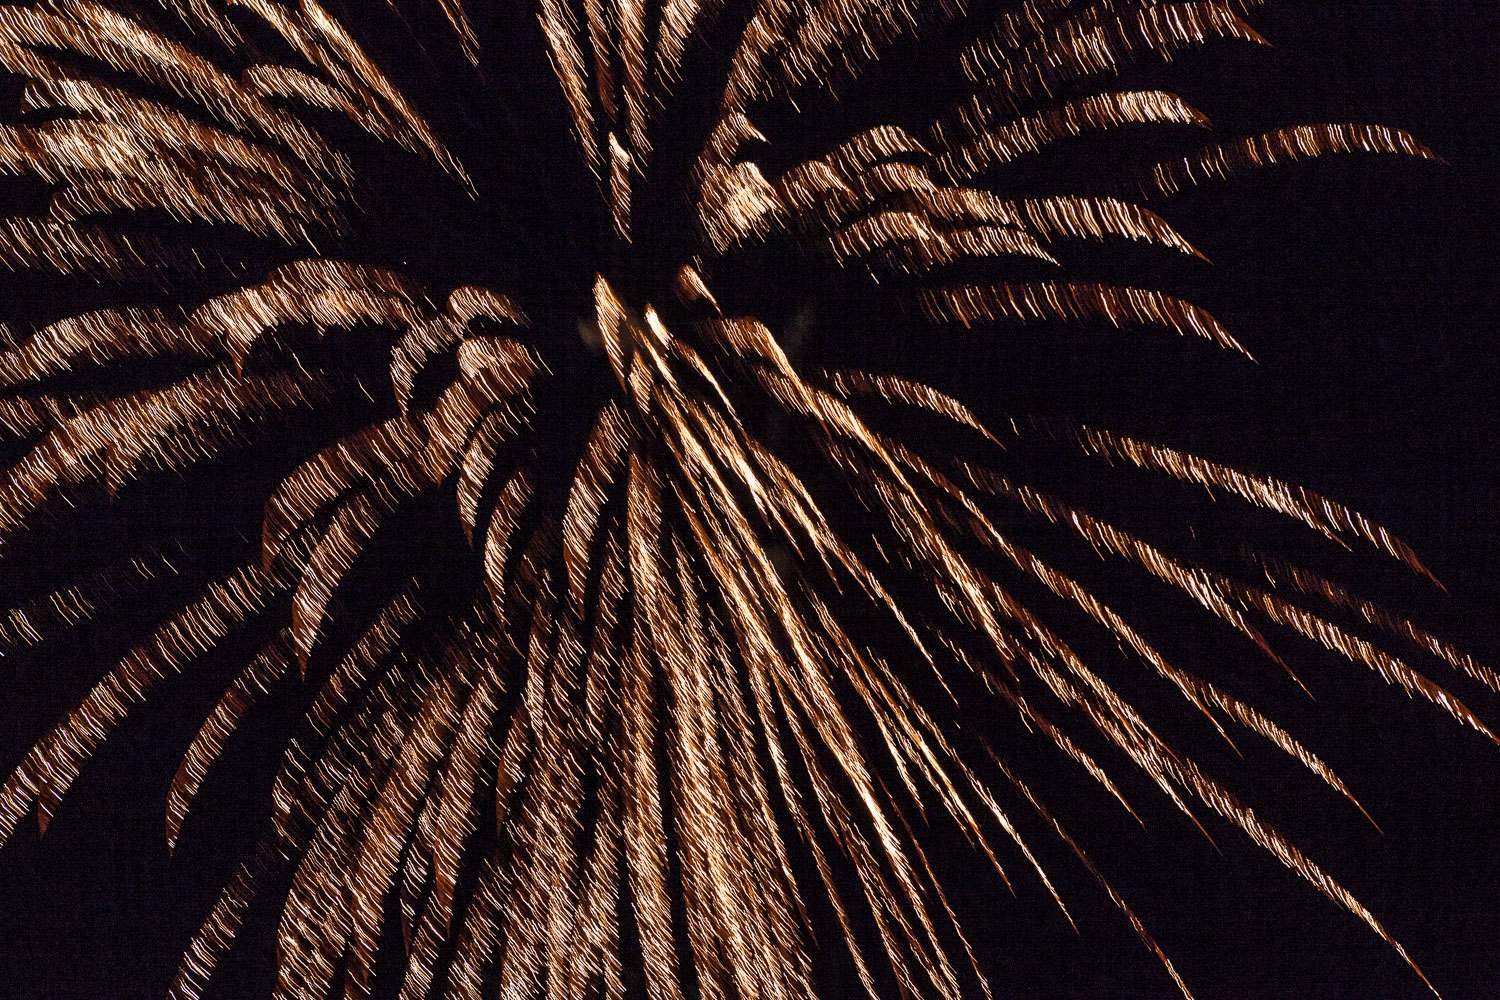 Fireworks_14_58043__MG_9037.jpg